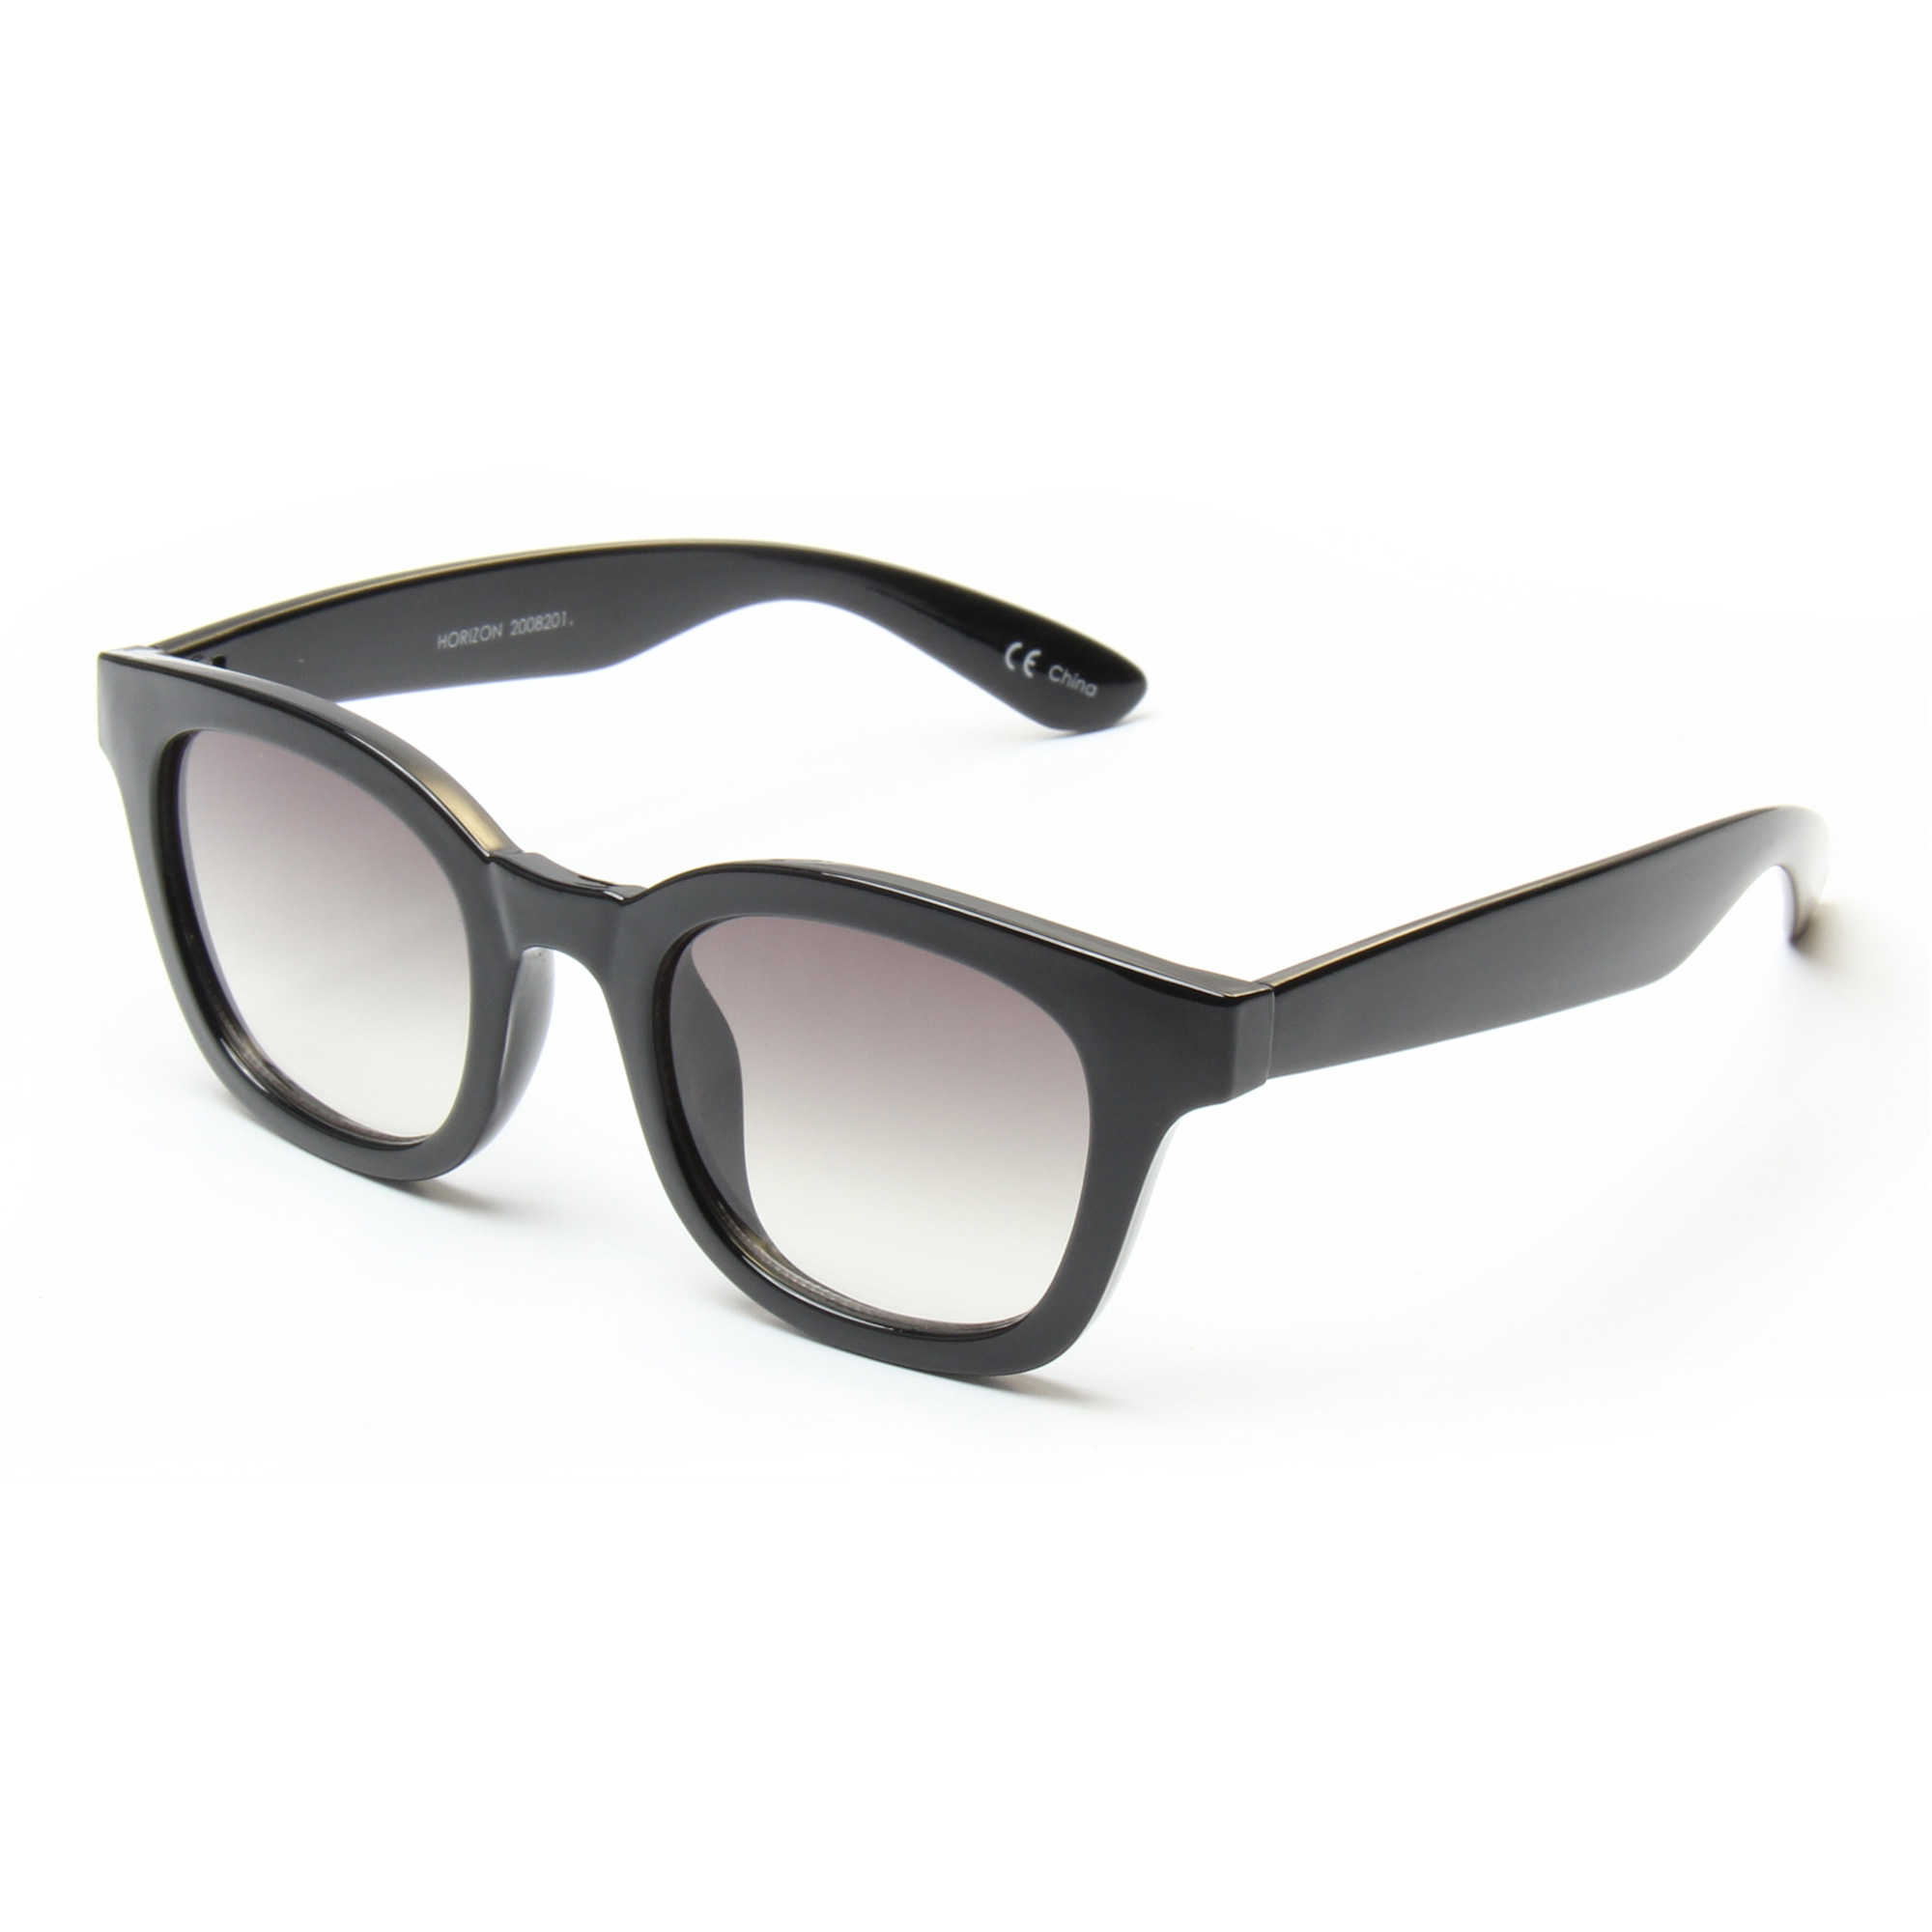 Eugenia unisex sunglasses factory for gift-2